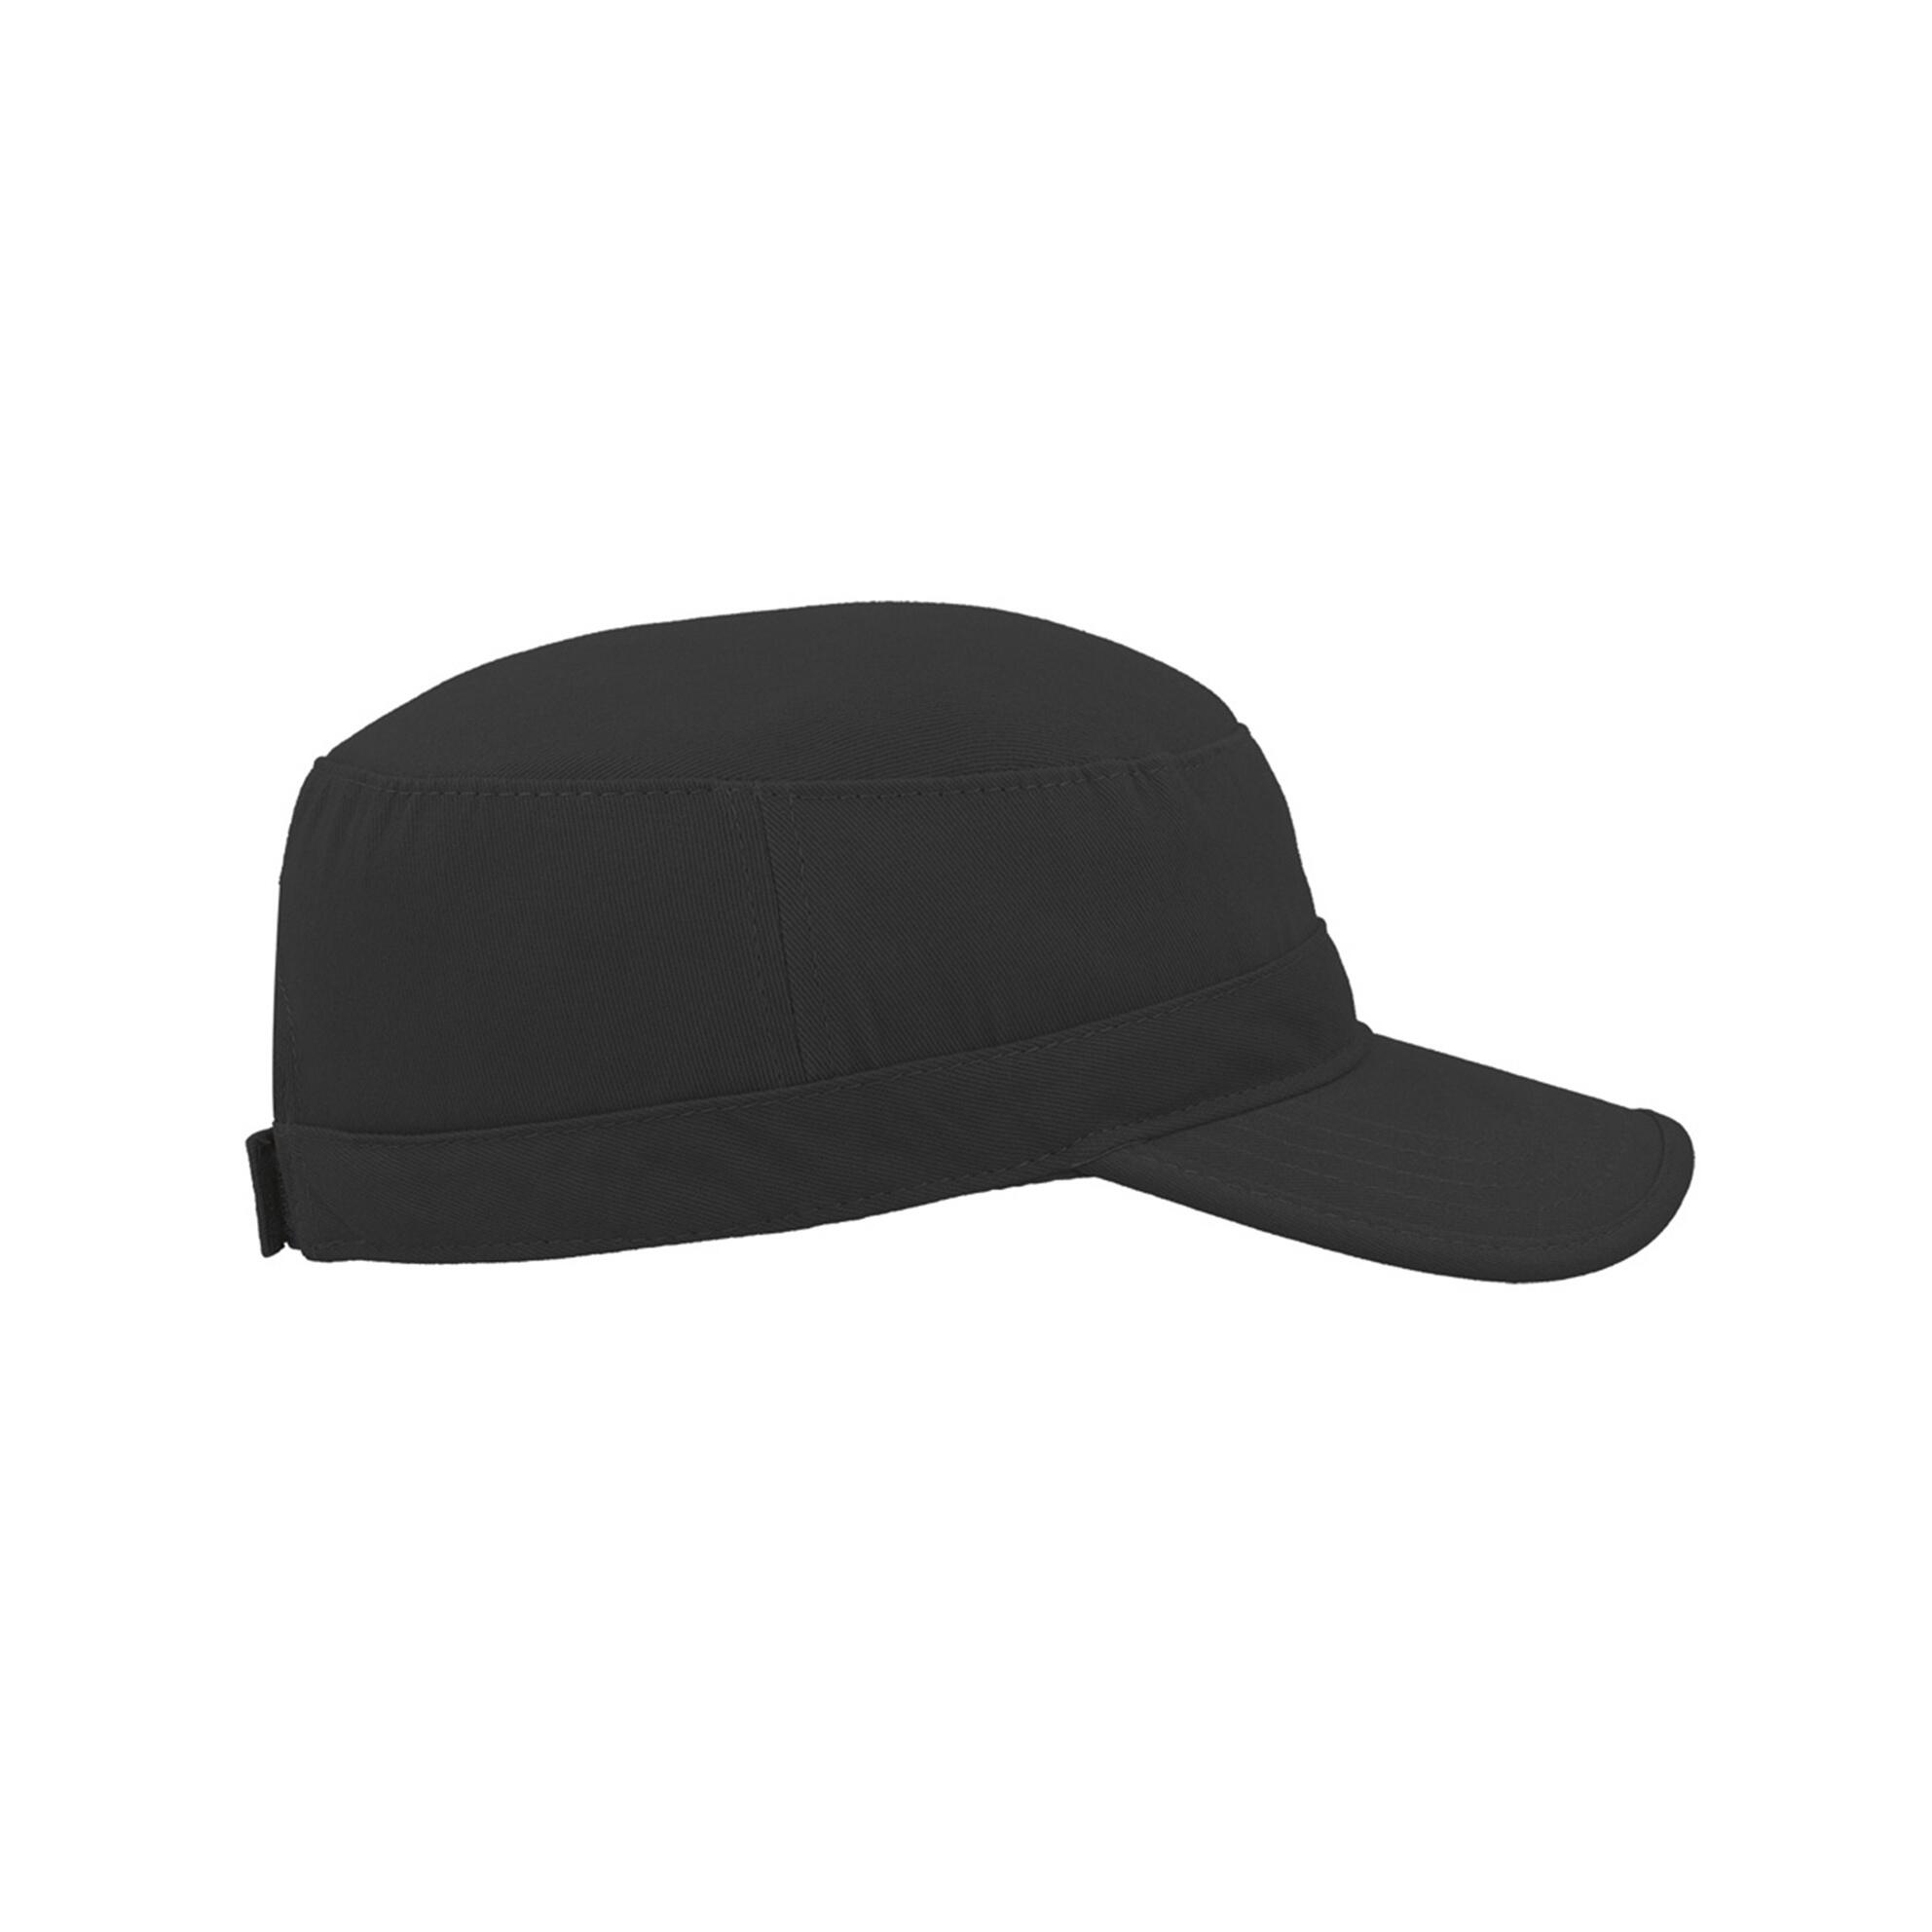 Tank Brushed Cotton Military Cap (Black) 4/5